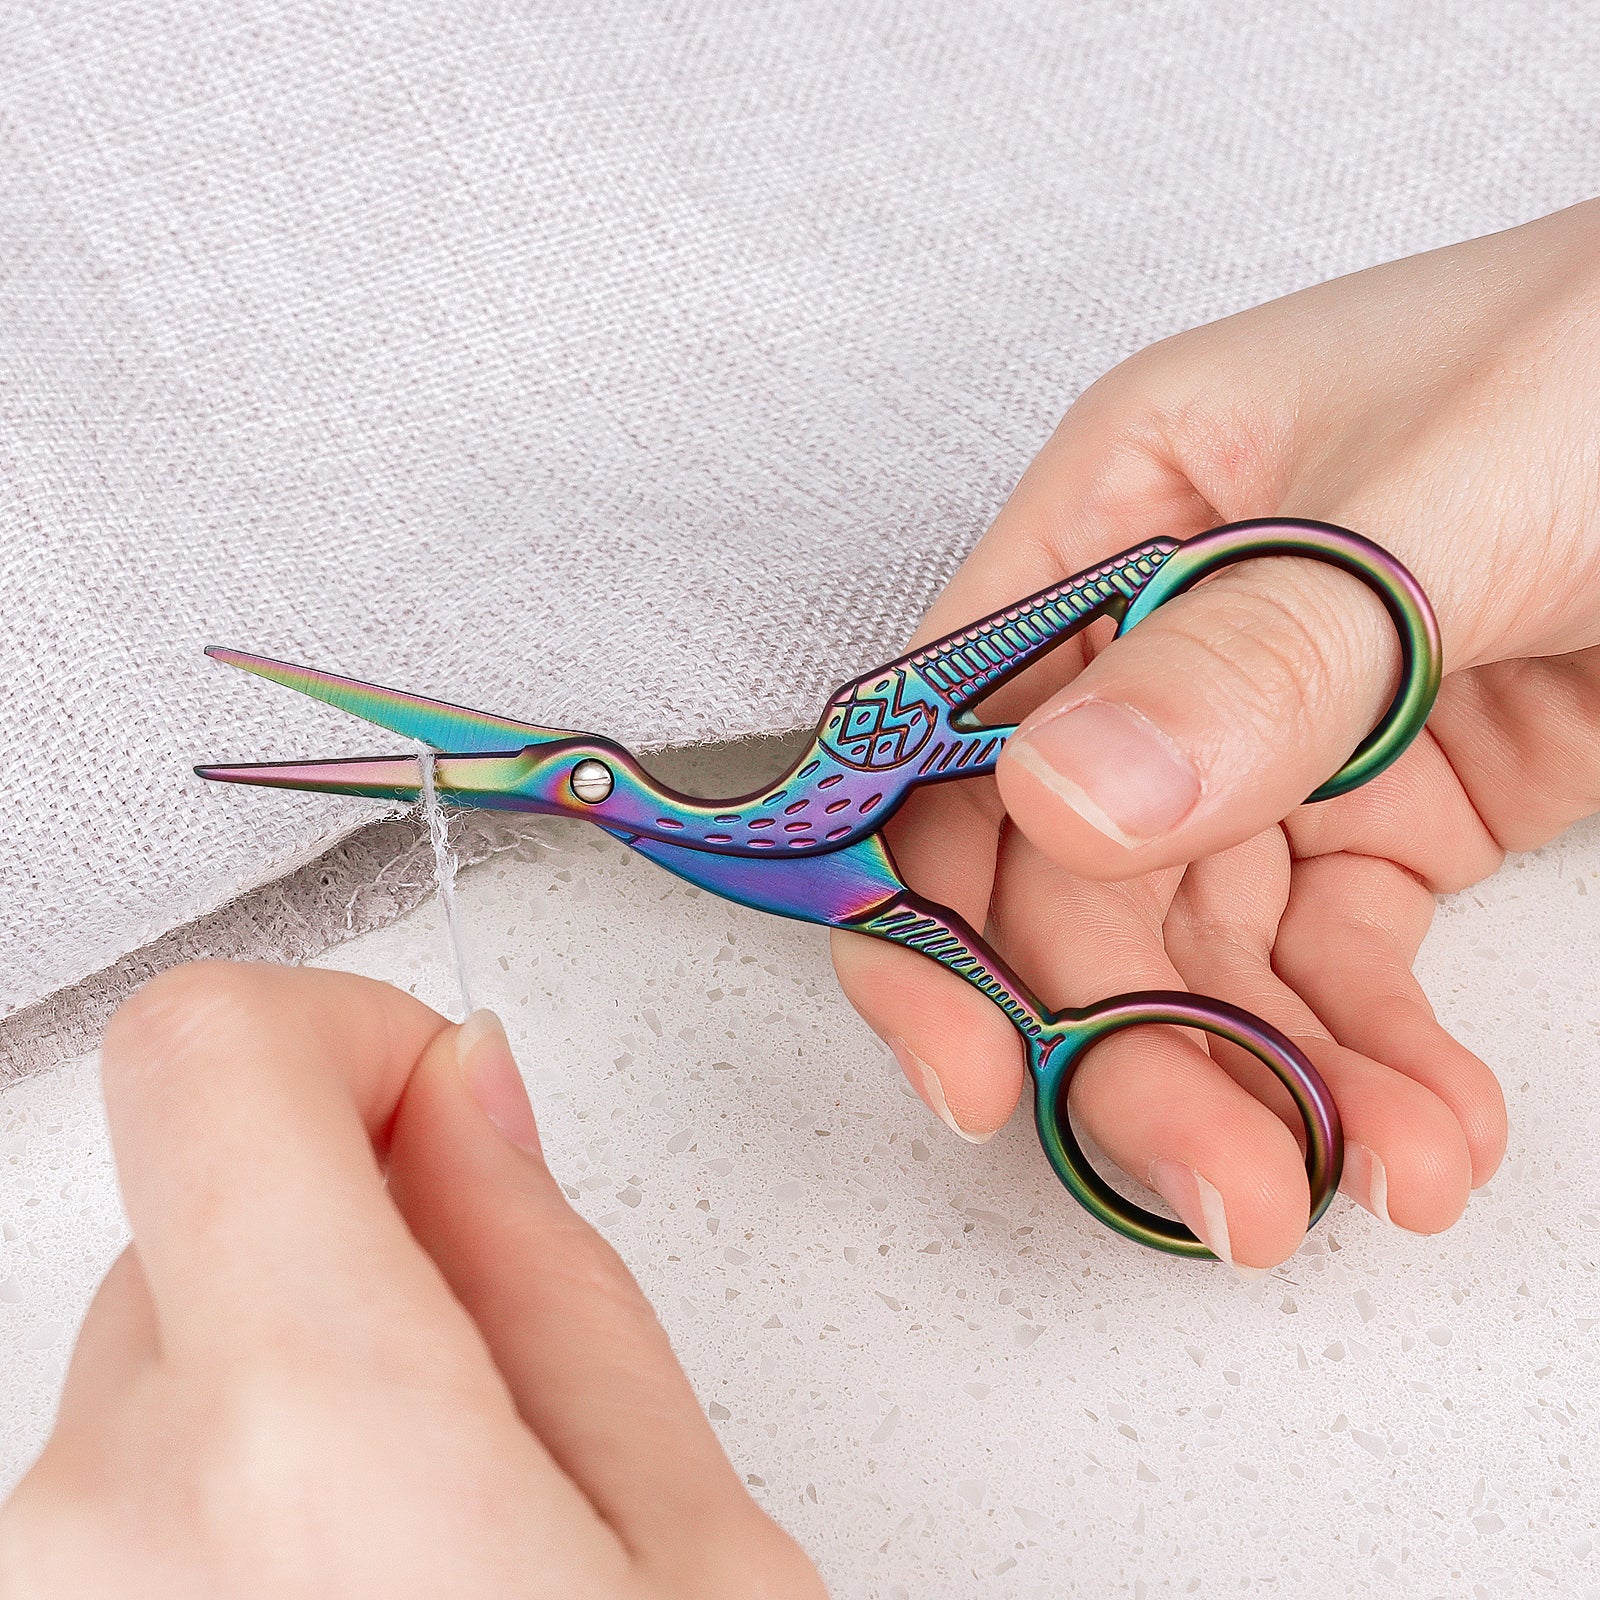 Asdirne Storch Sewing Scissors, Embroidery Scissors